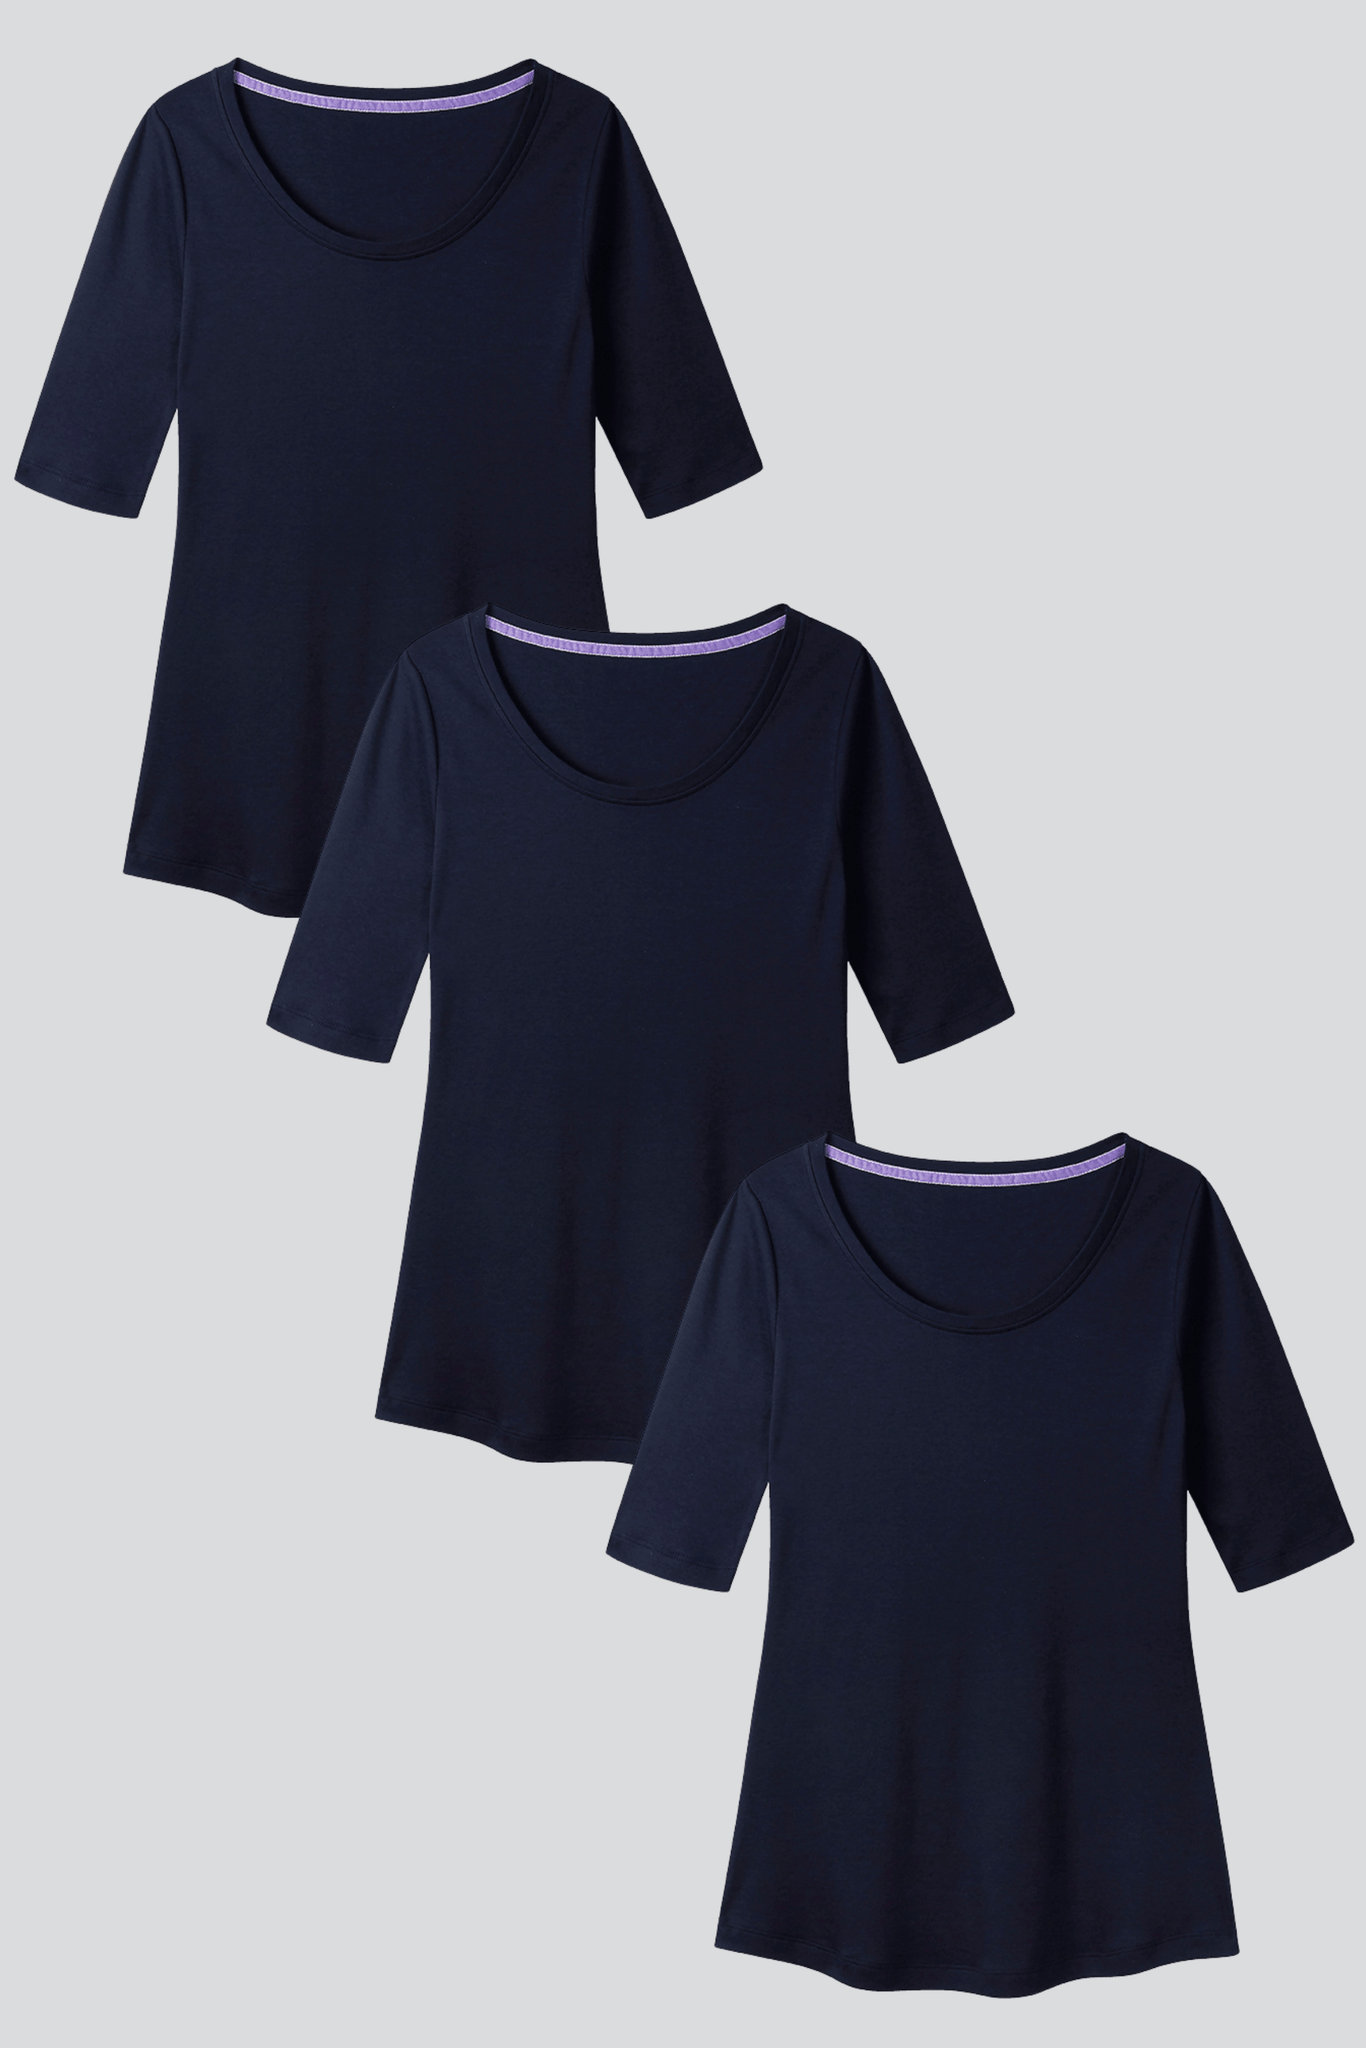 Ladies luxury lavender | t-shirt Clothing Hill neck Lavender scoop